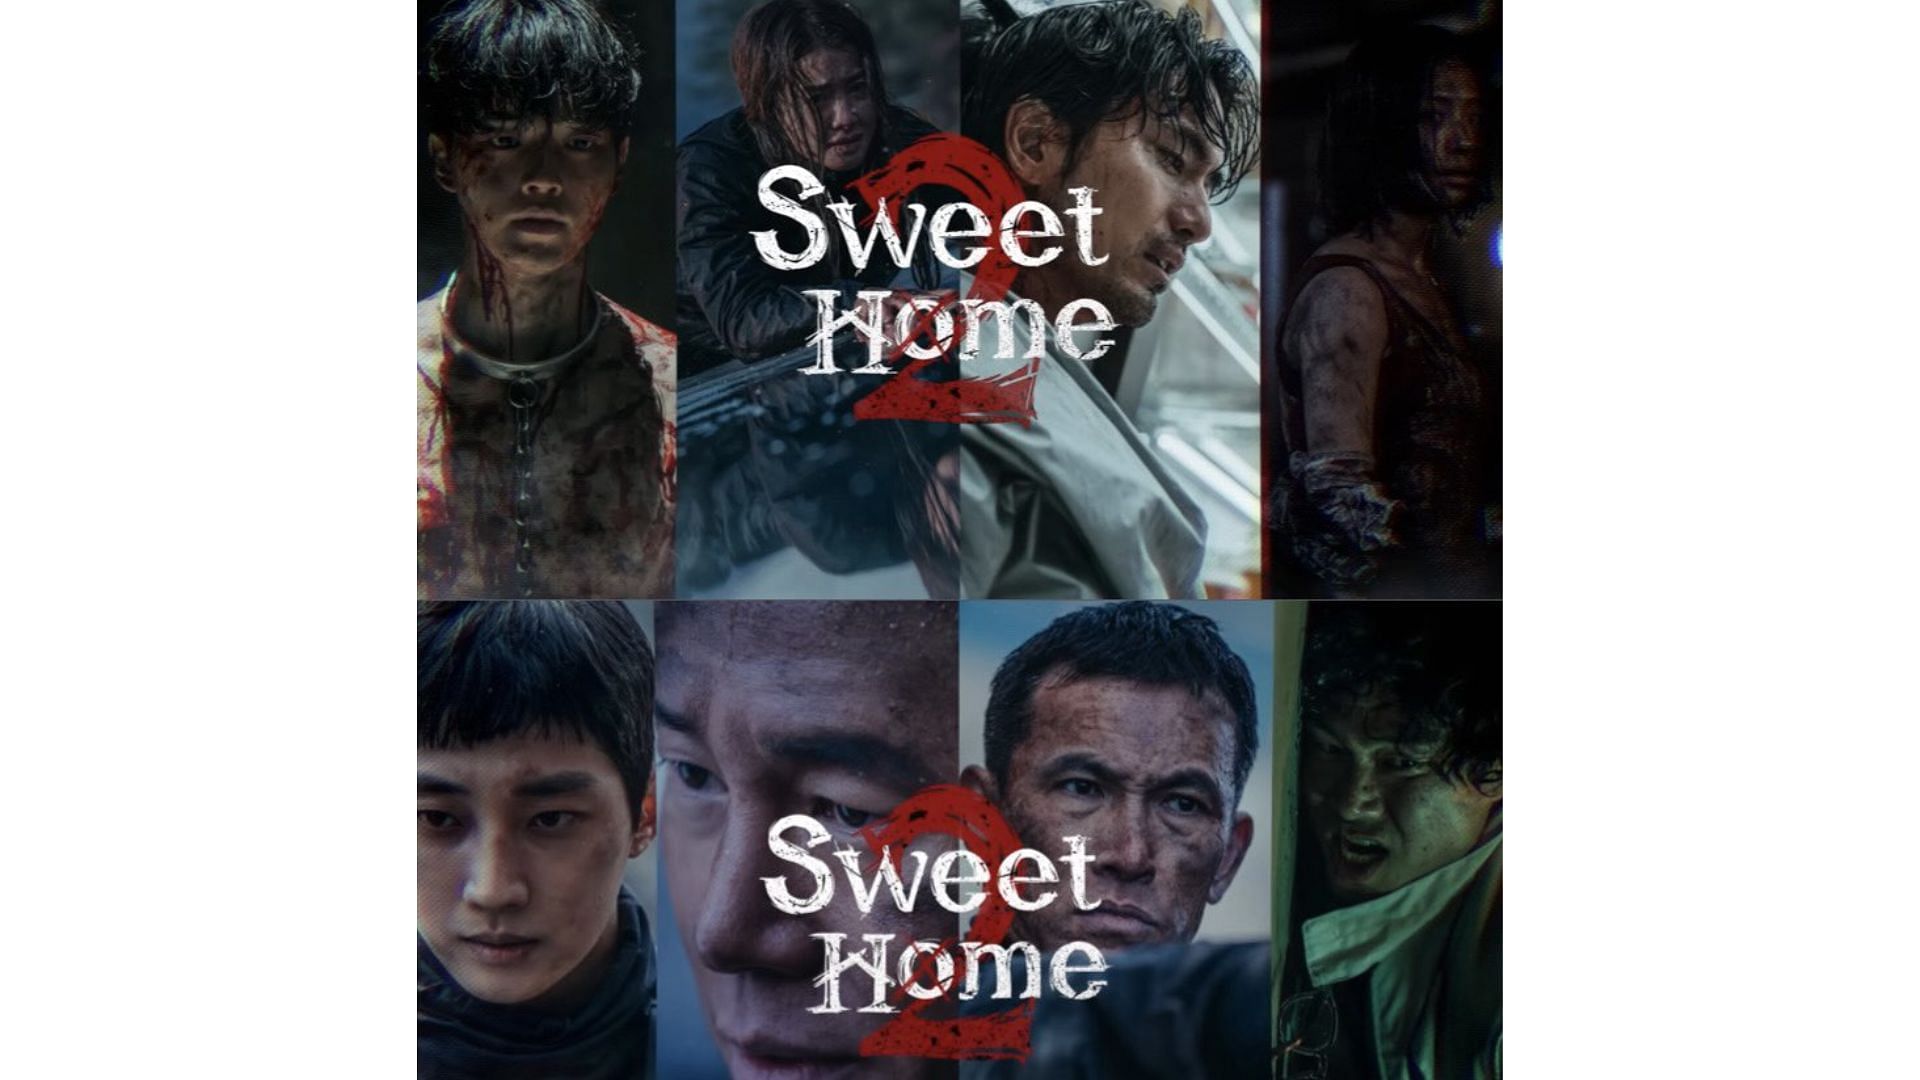 Sweet Home 2 (image via twitter/Jungjinyeong)